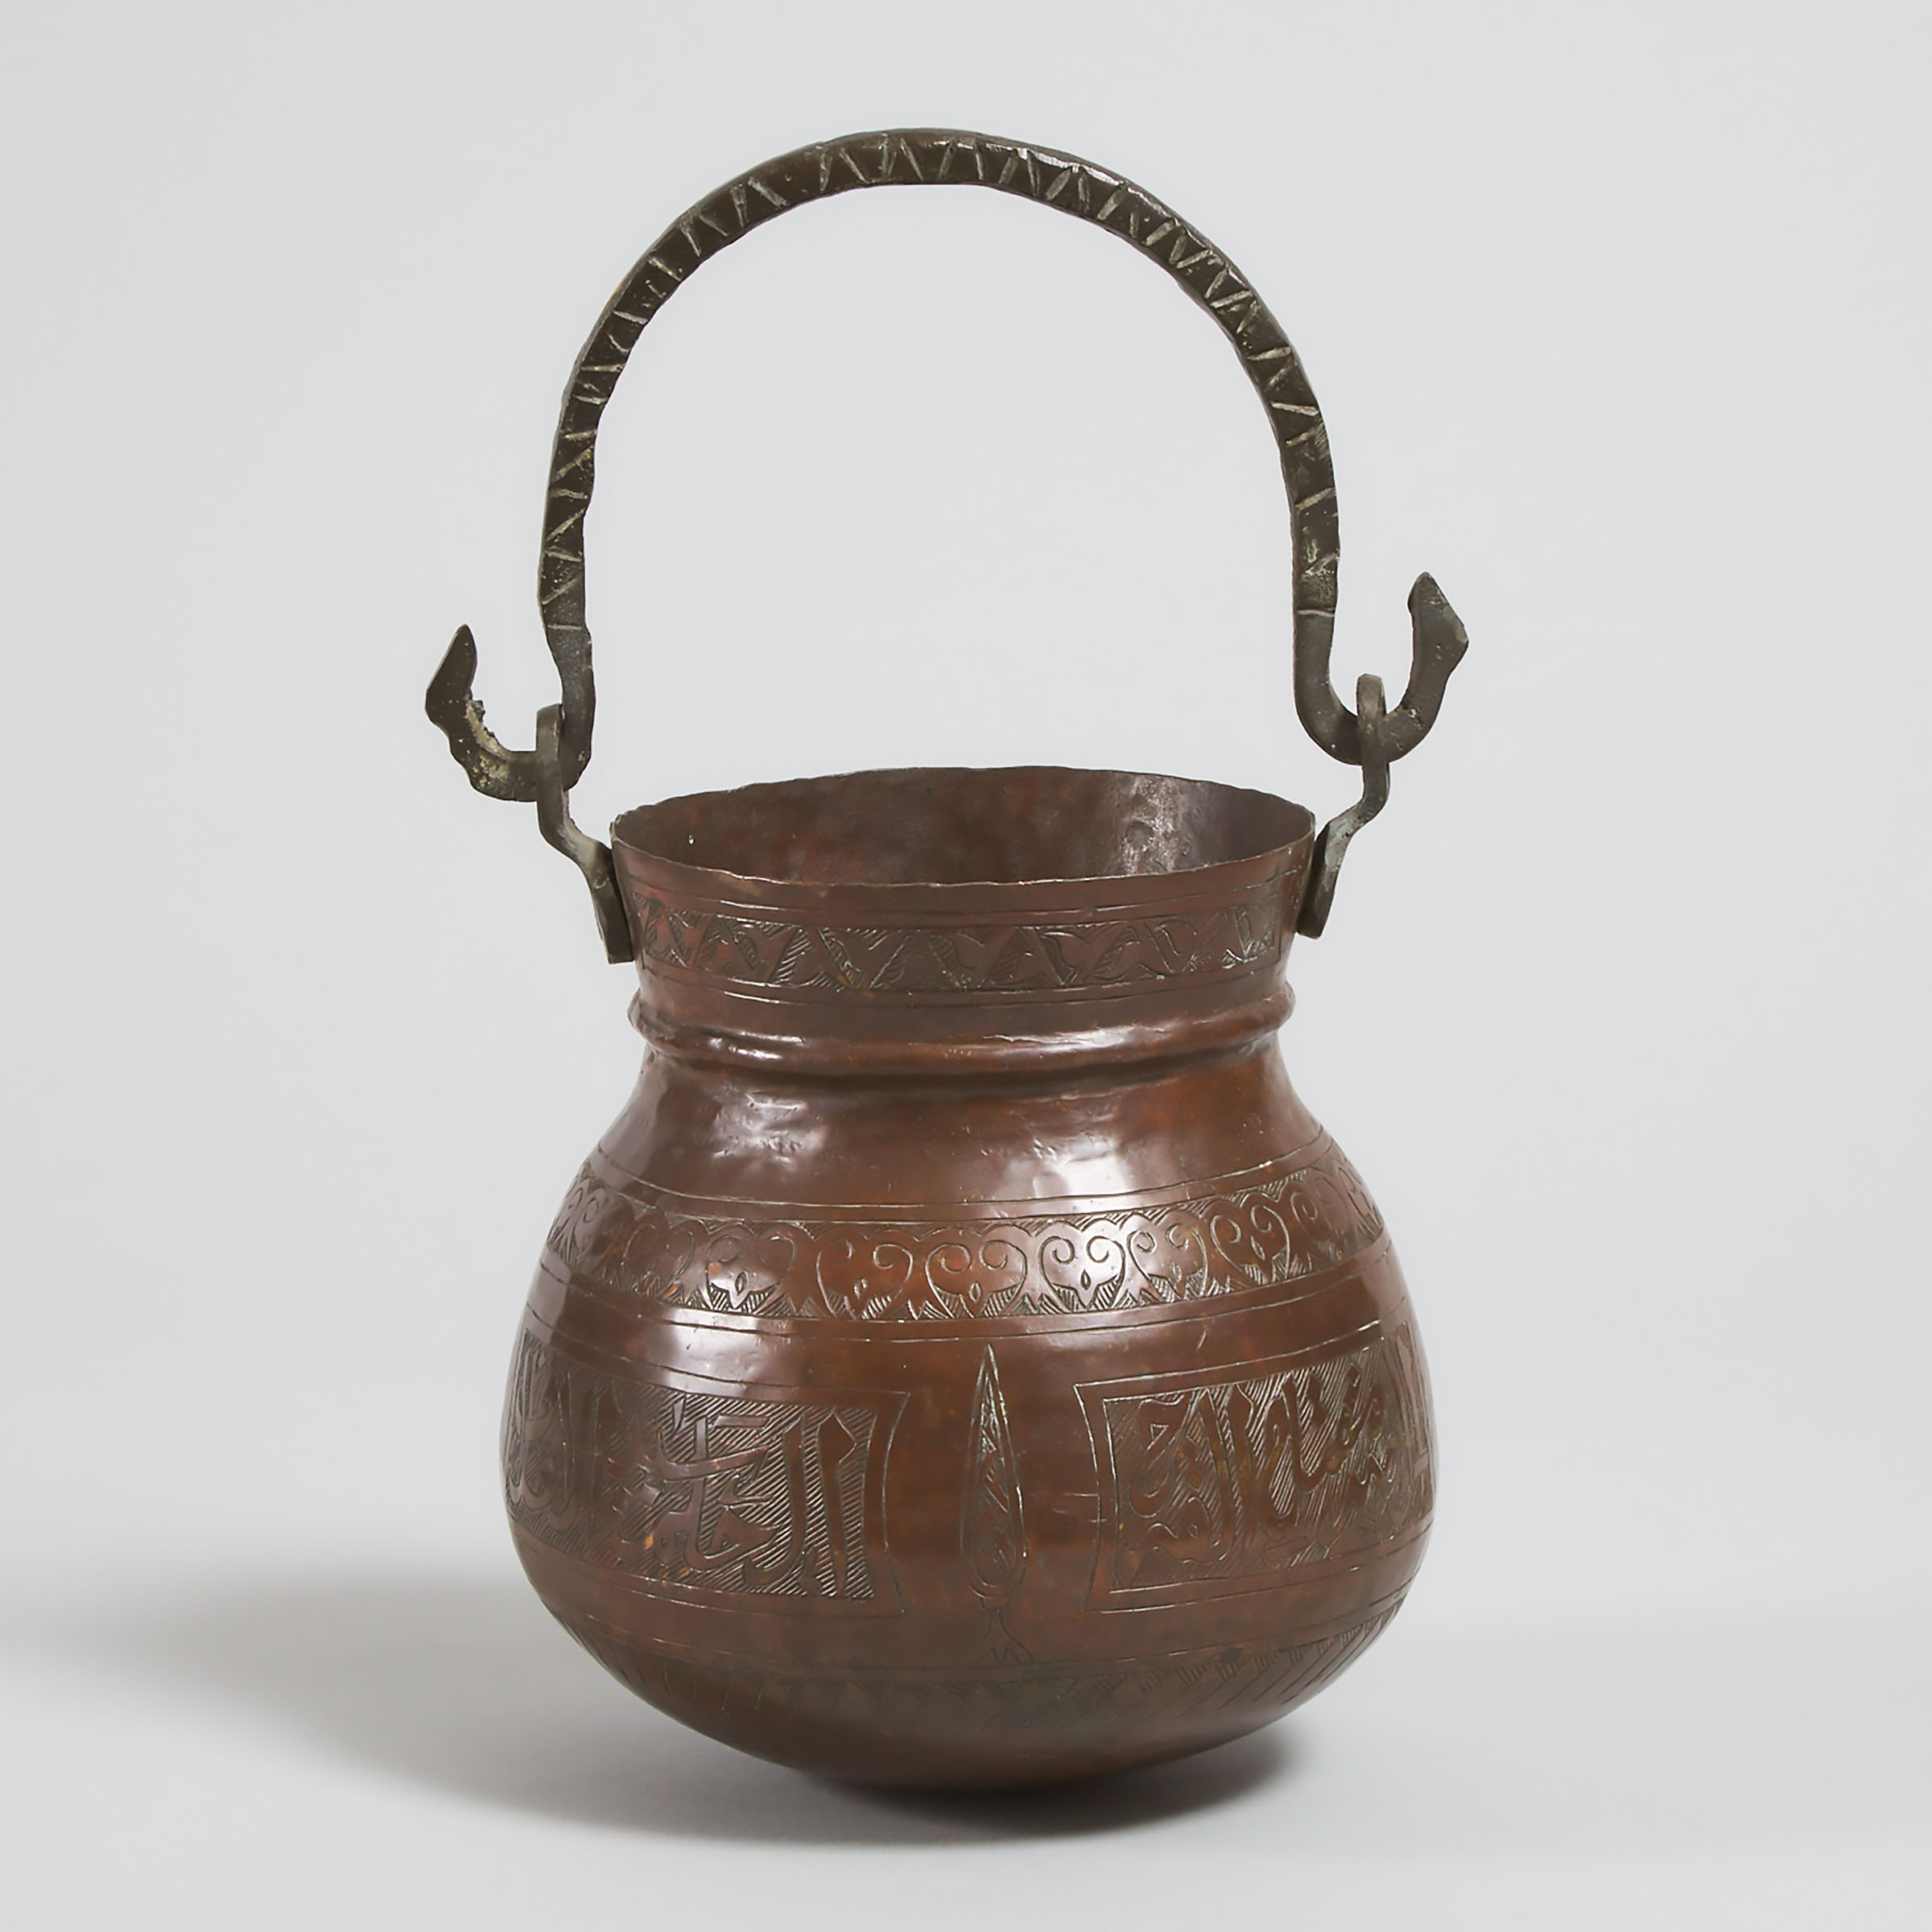 Syrian Chased Copper Cauldron, 19th century